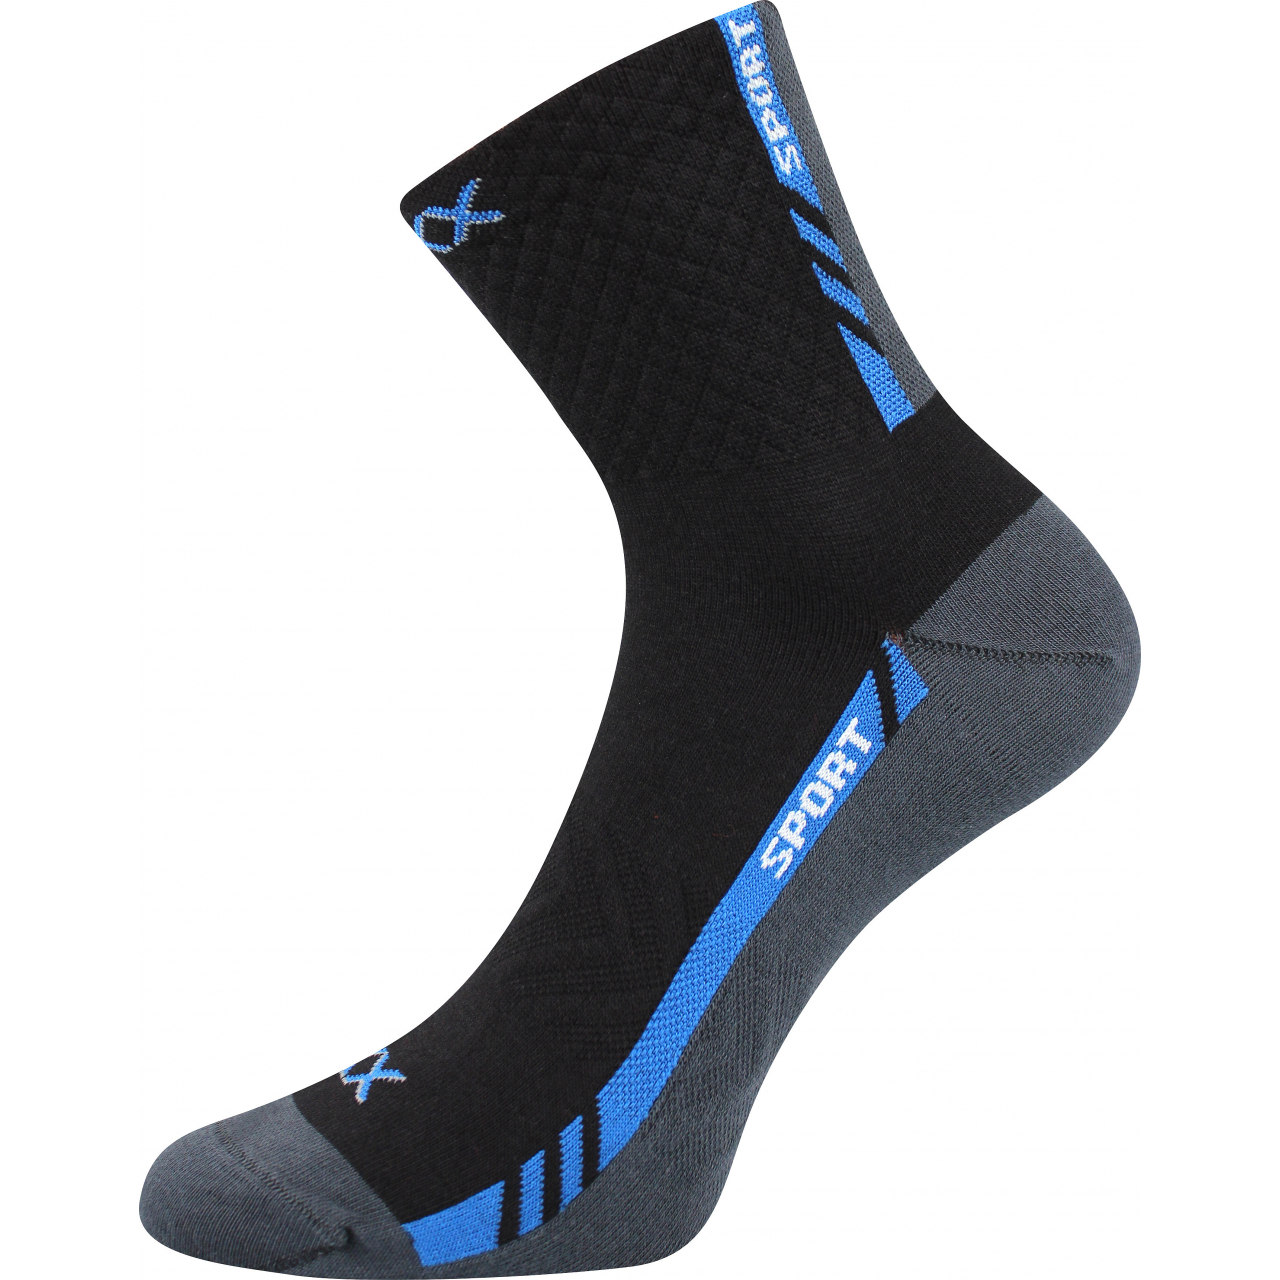 Ponožky sportovní Voxx Pius - černé-šedé, 35-38